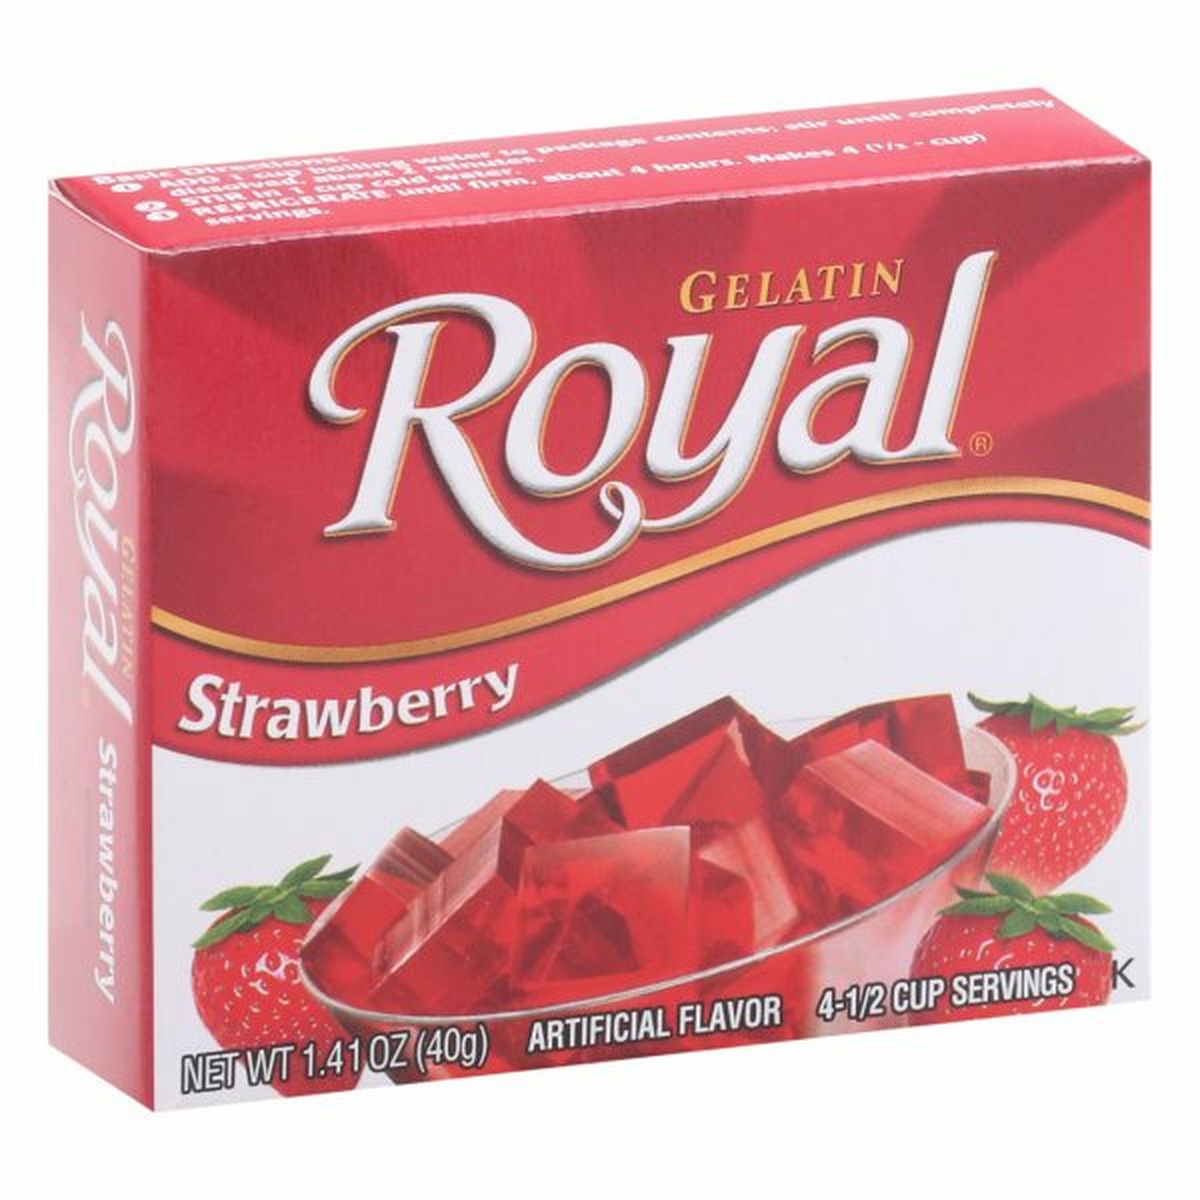 Calories in Royal Gelatin, Strawberry